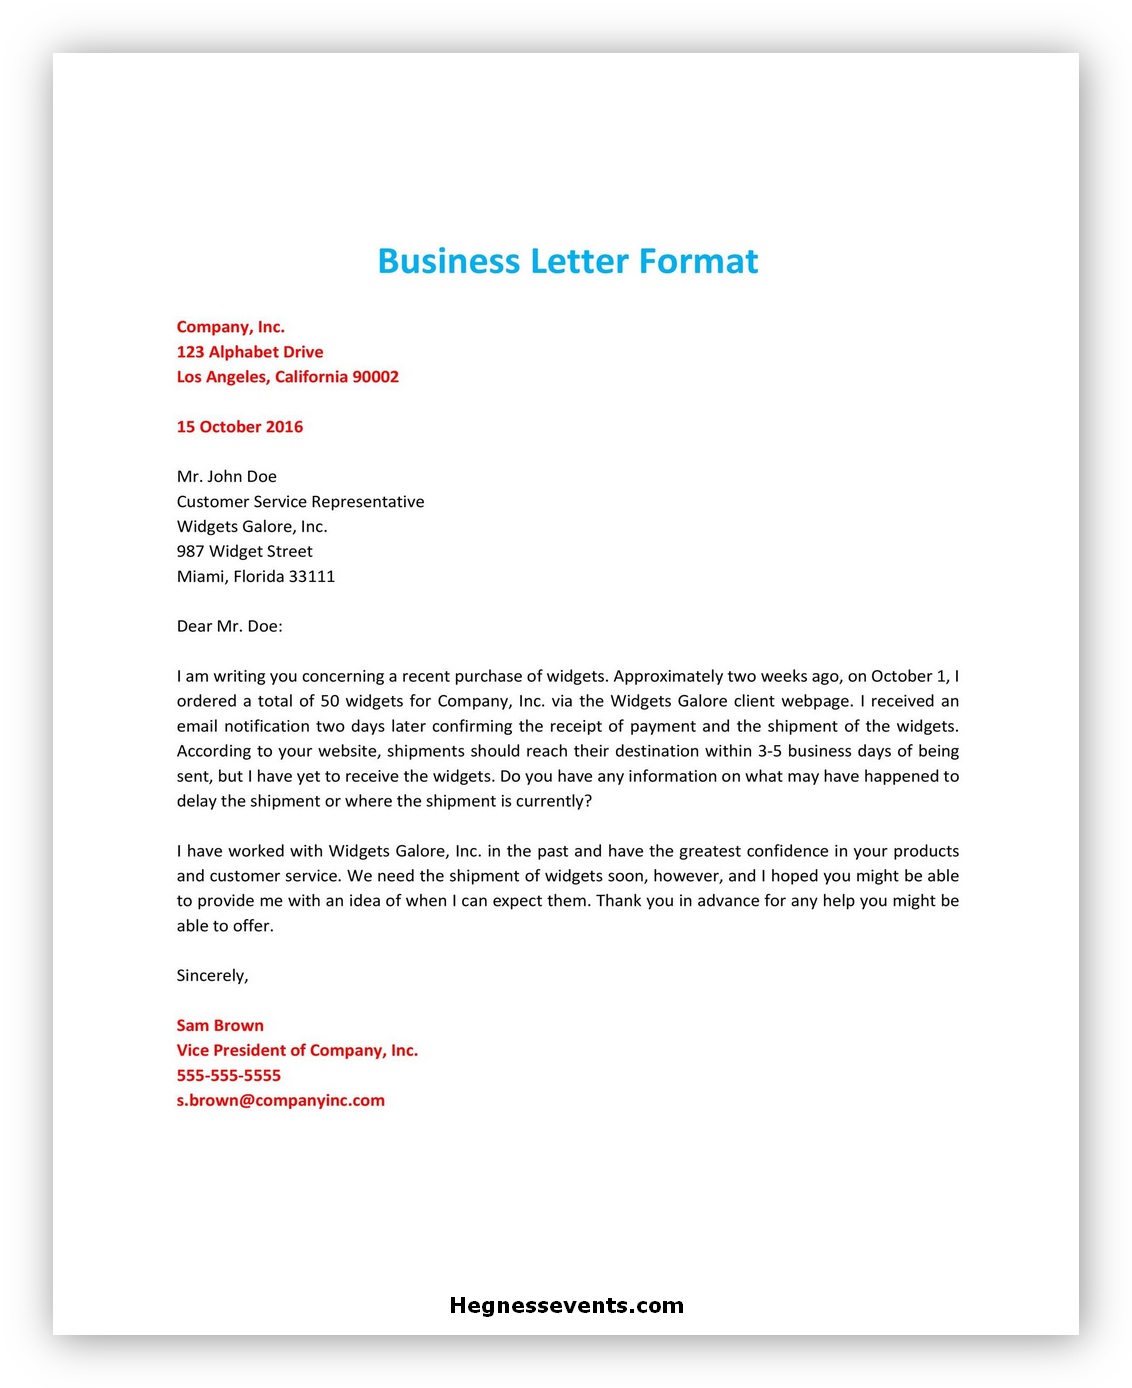 Business letter Format 01